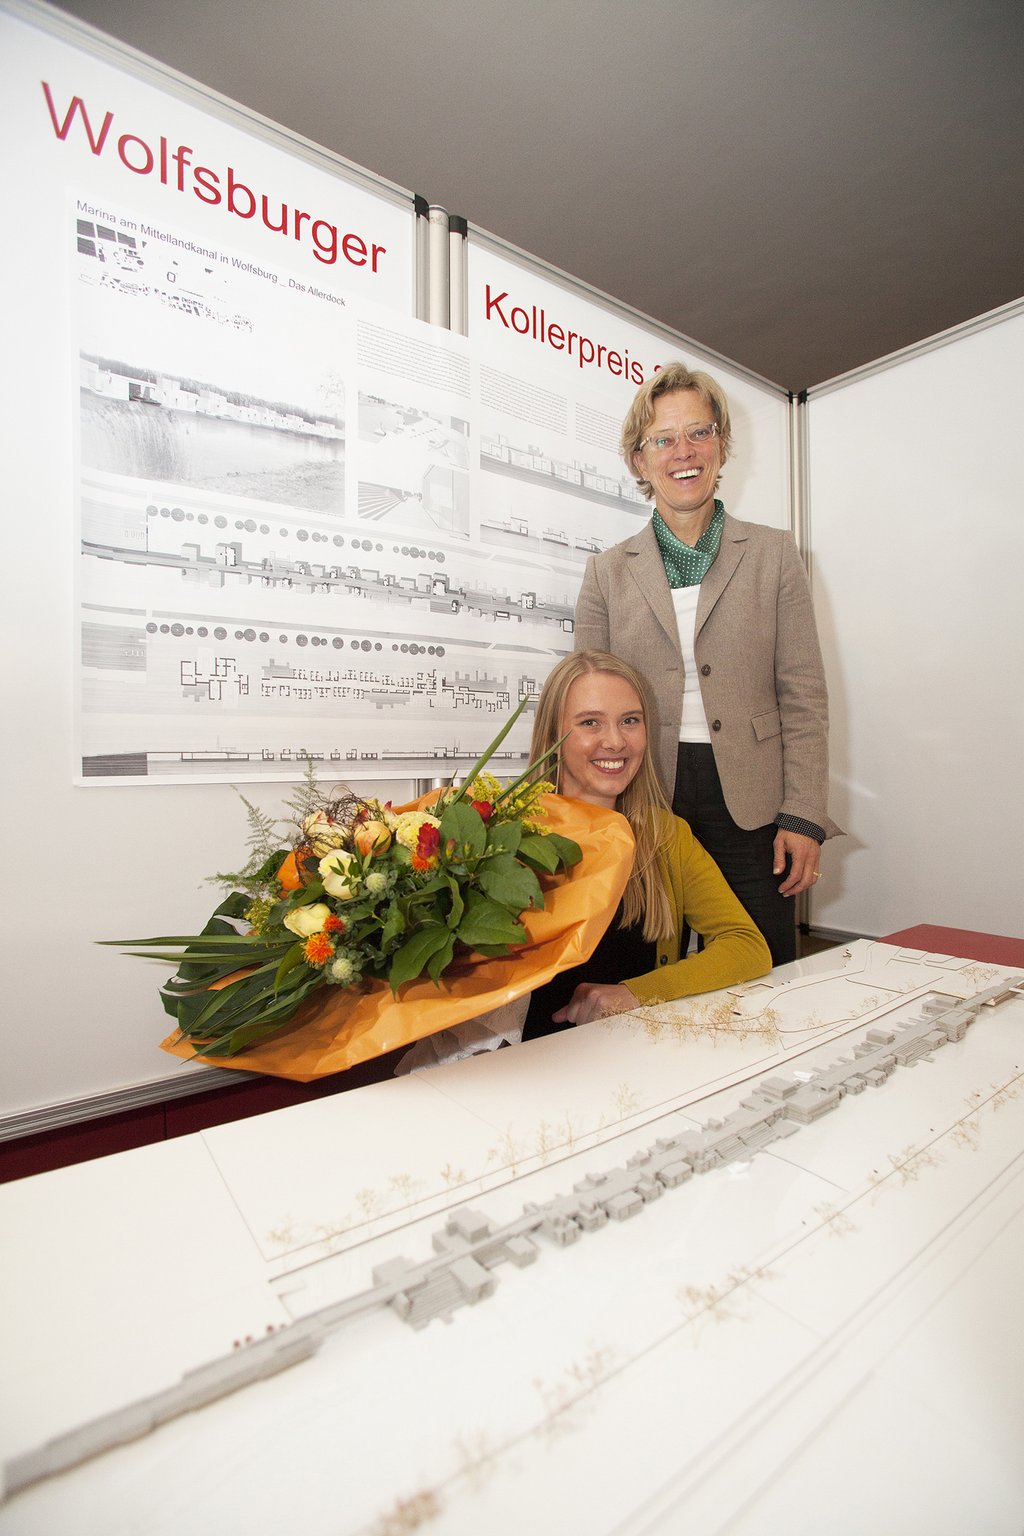 Wolfsburger Koller-Preis 2013 